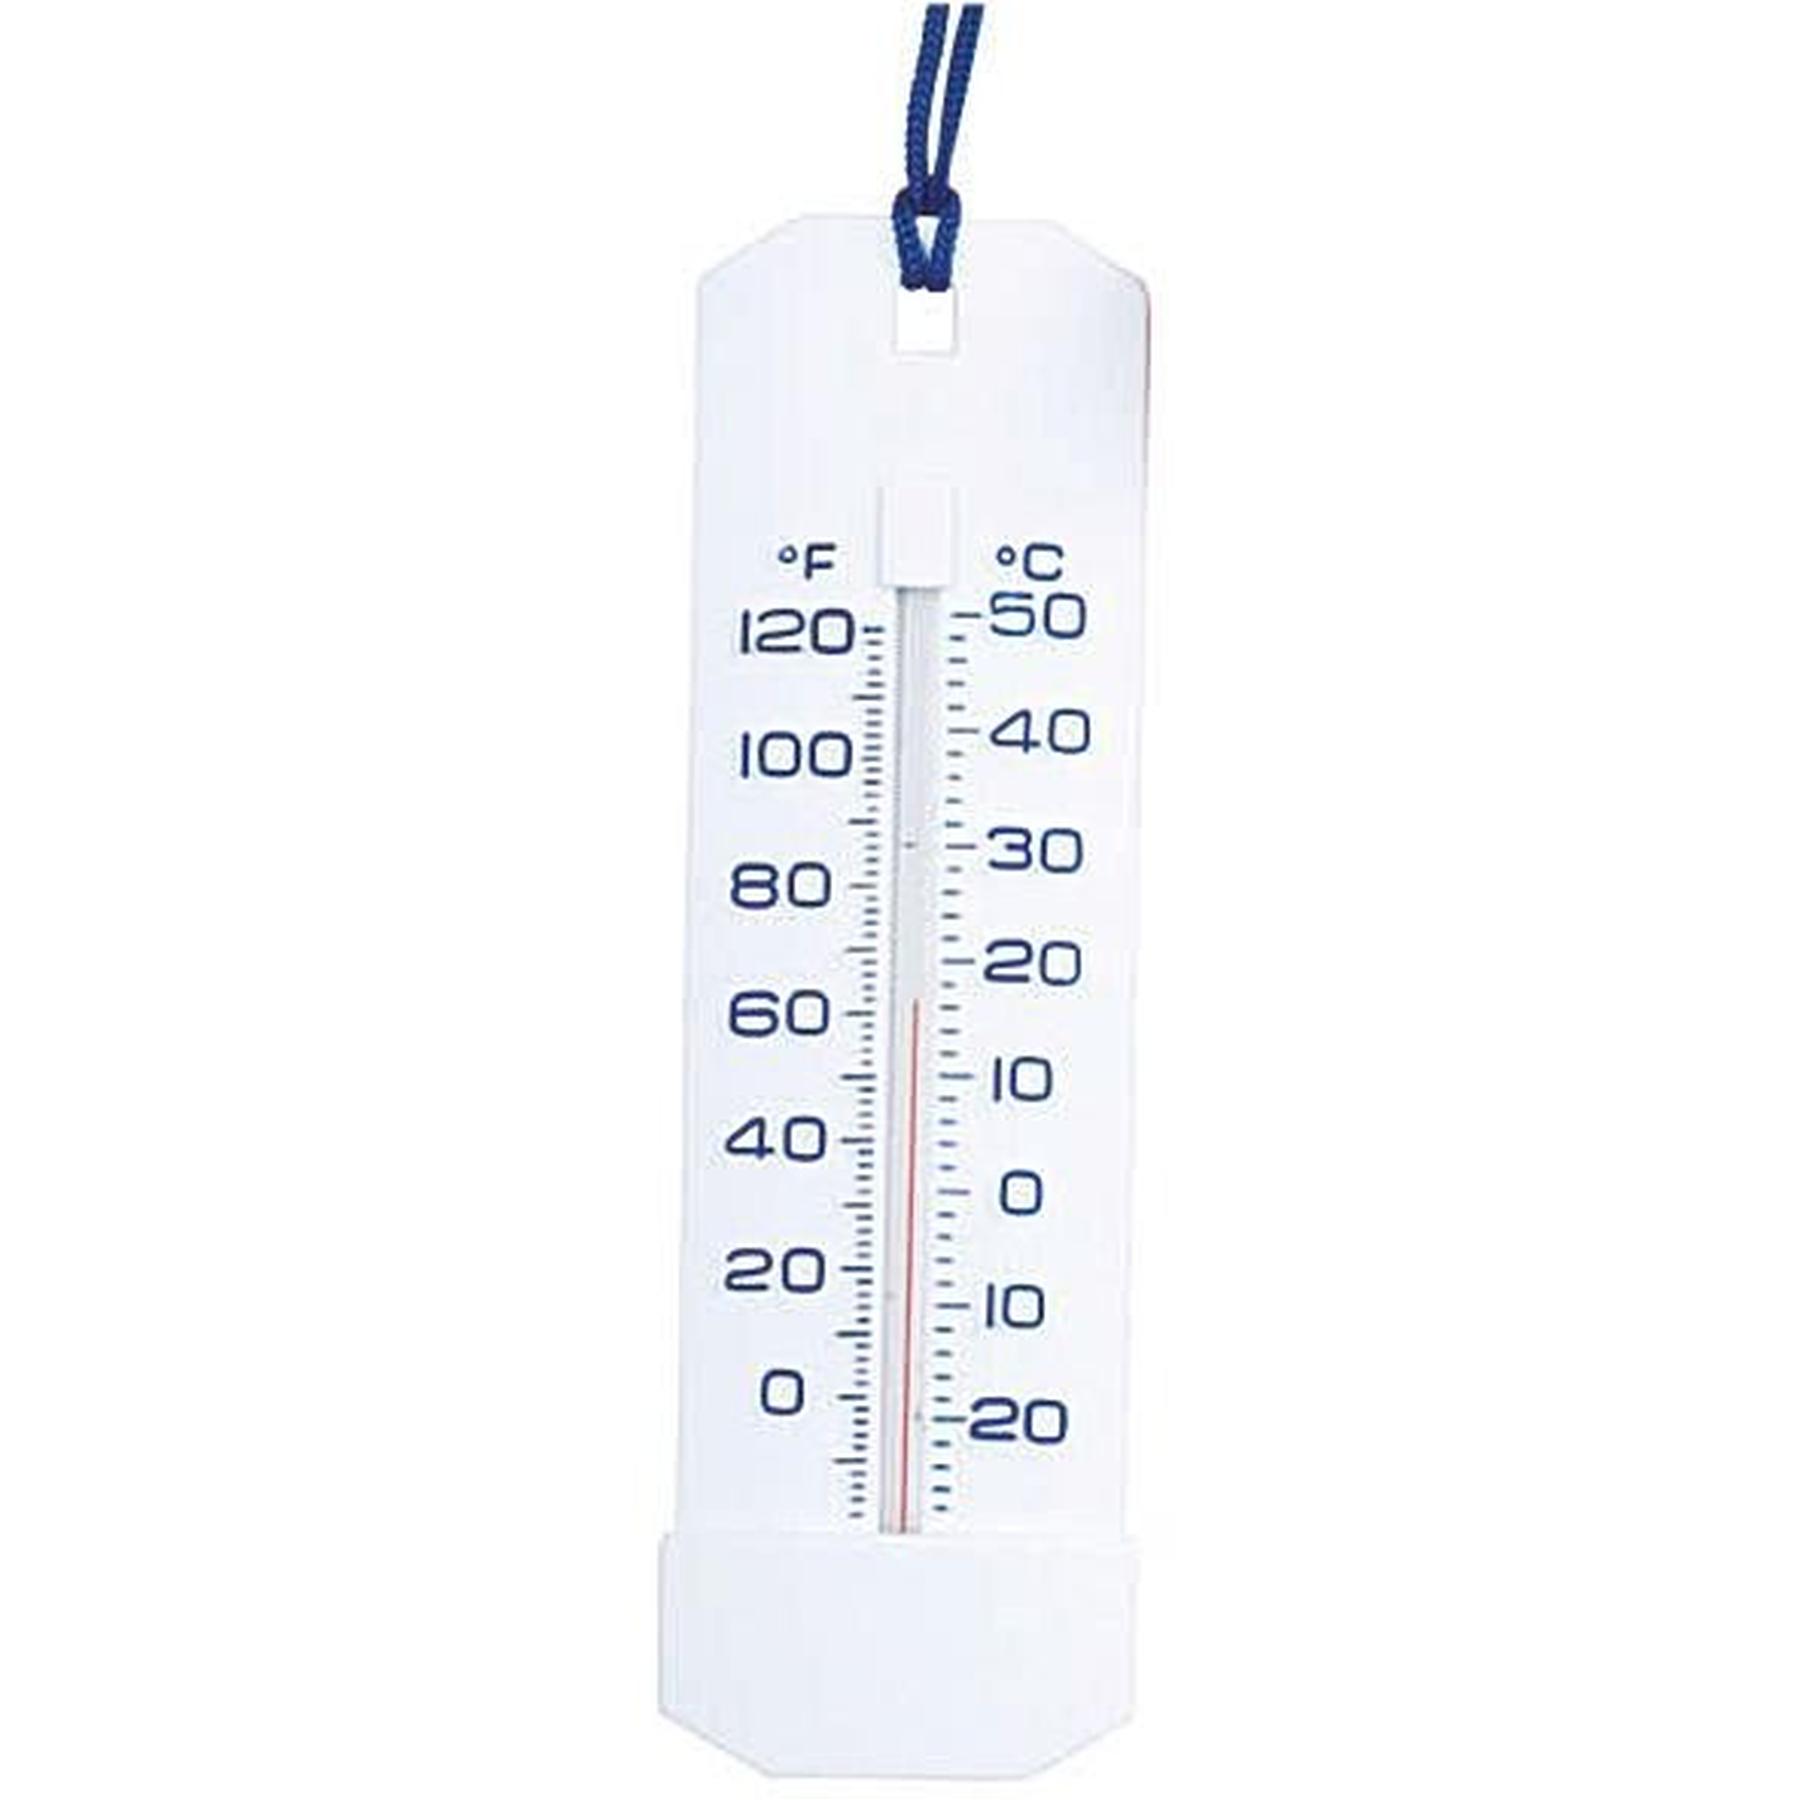 Thermomètre flottant pour piscine Gamme PRO Jumbo blanc